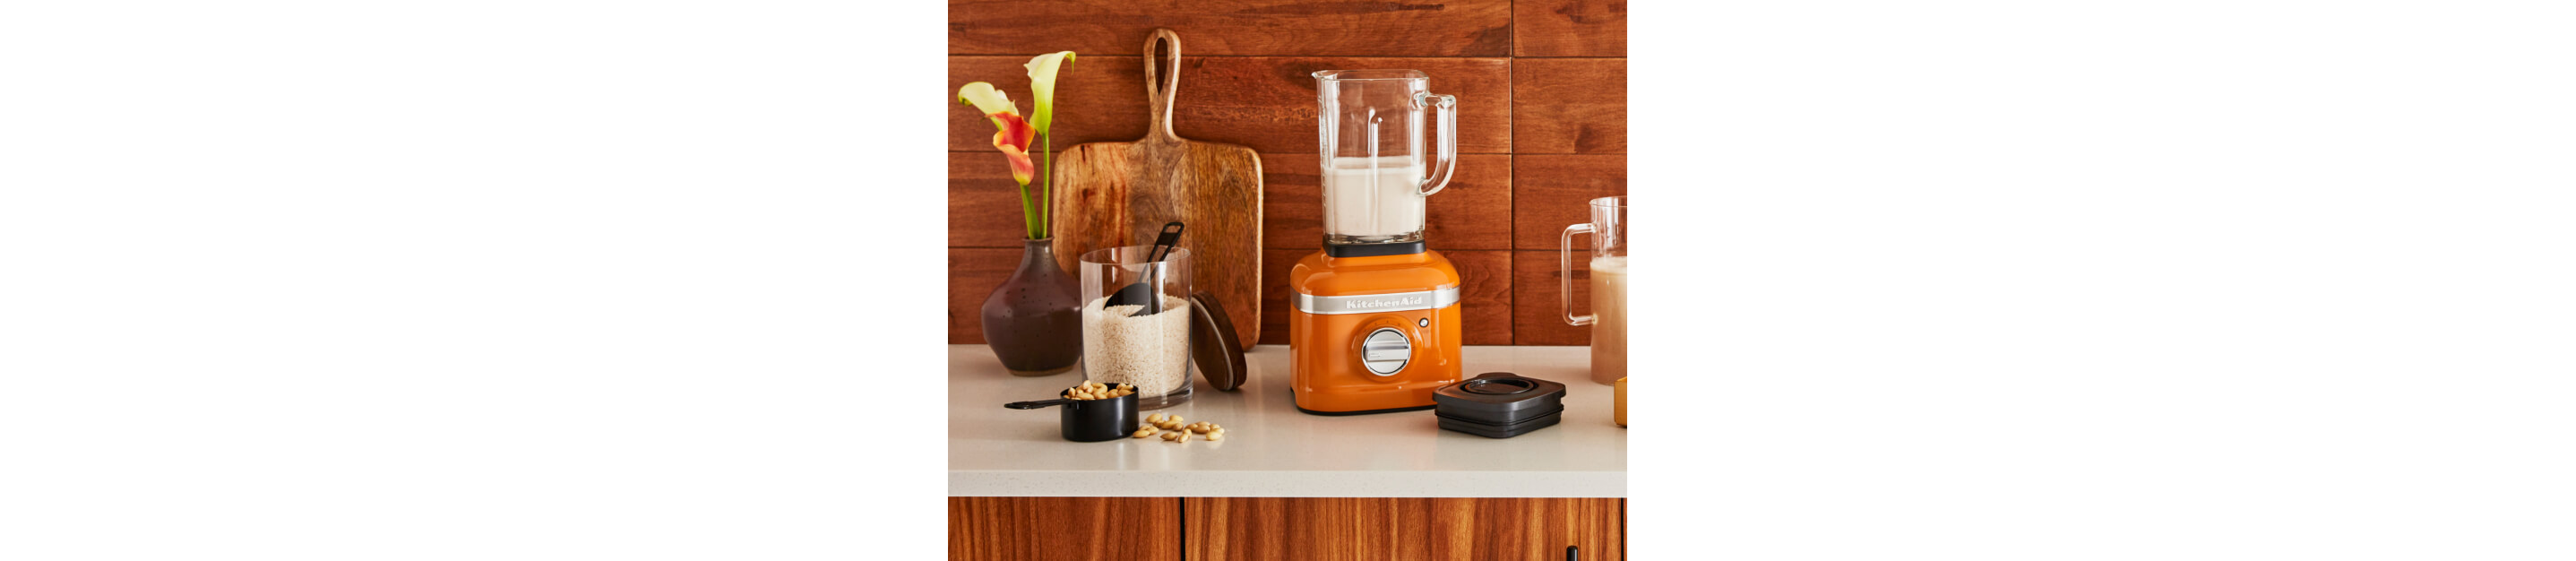 Blender KitchenAid® v medu proti dřevěné backsplash